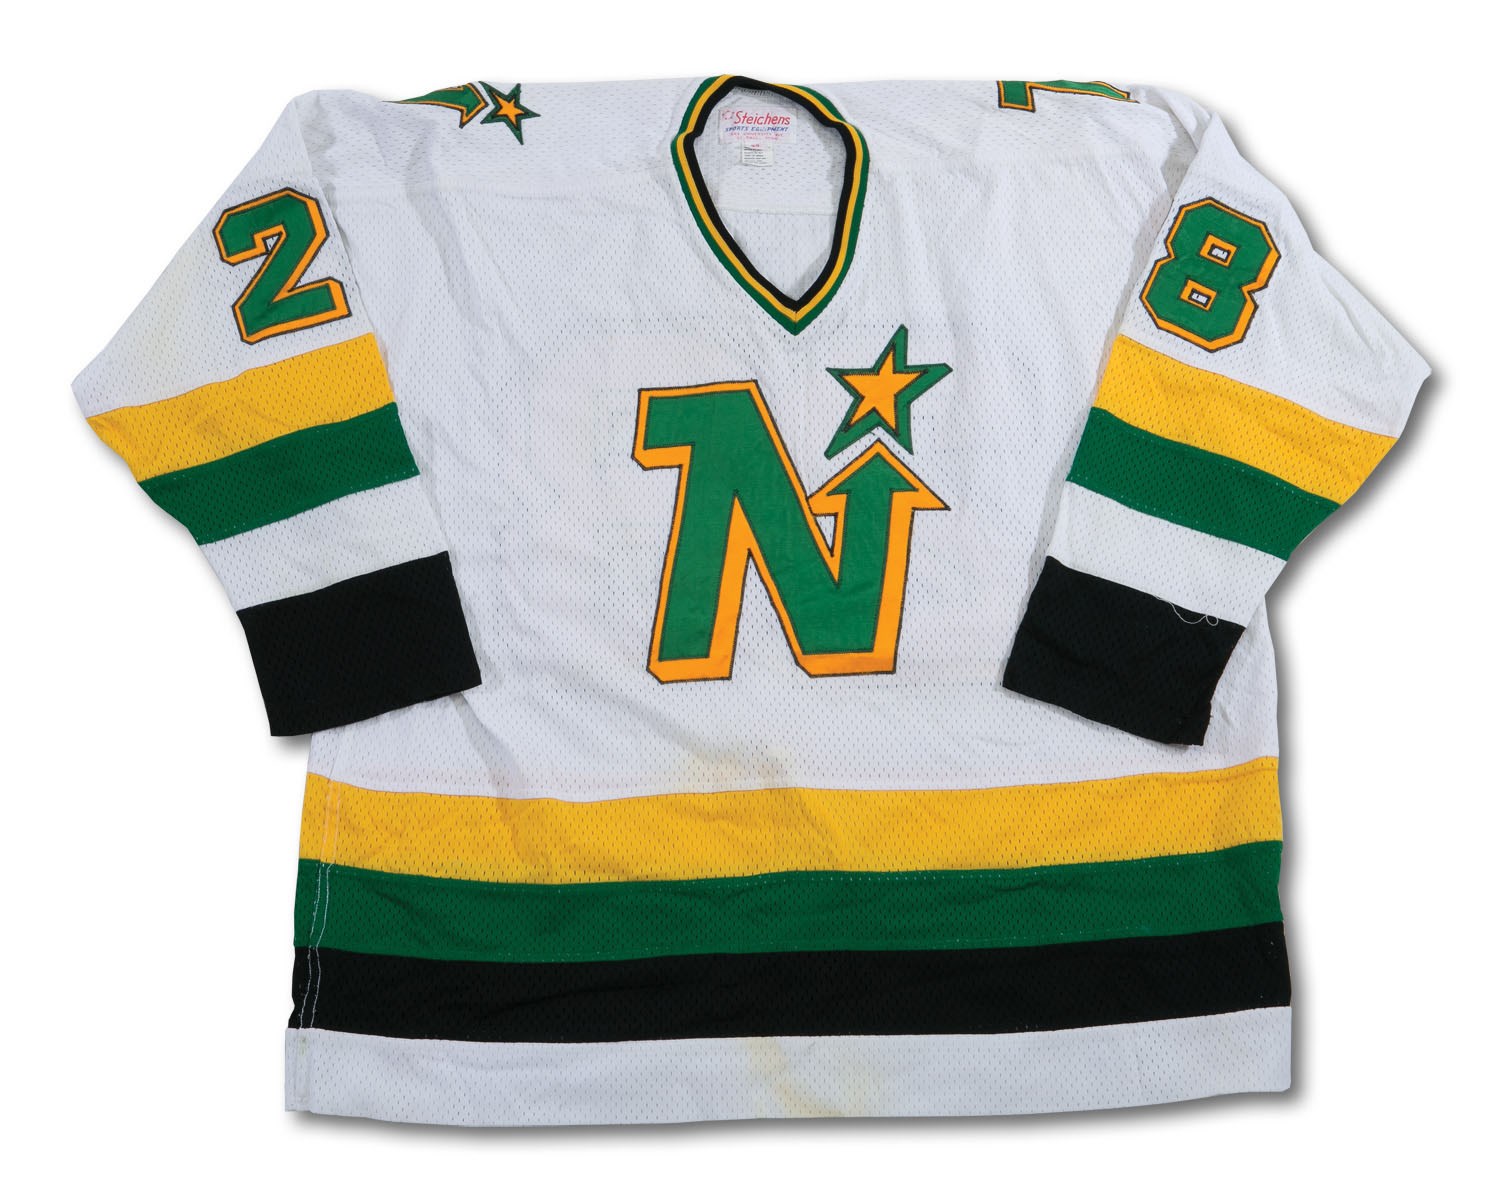 Minnesota North Stars jersey